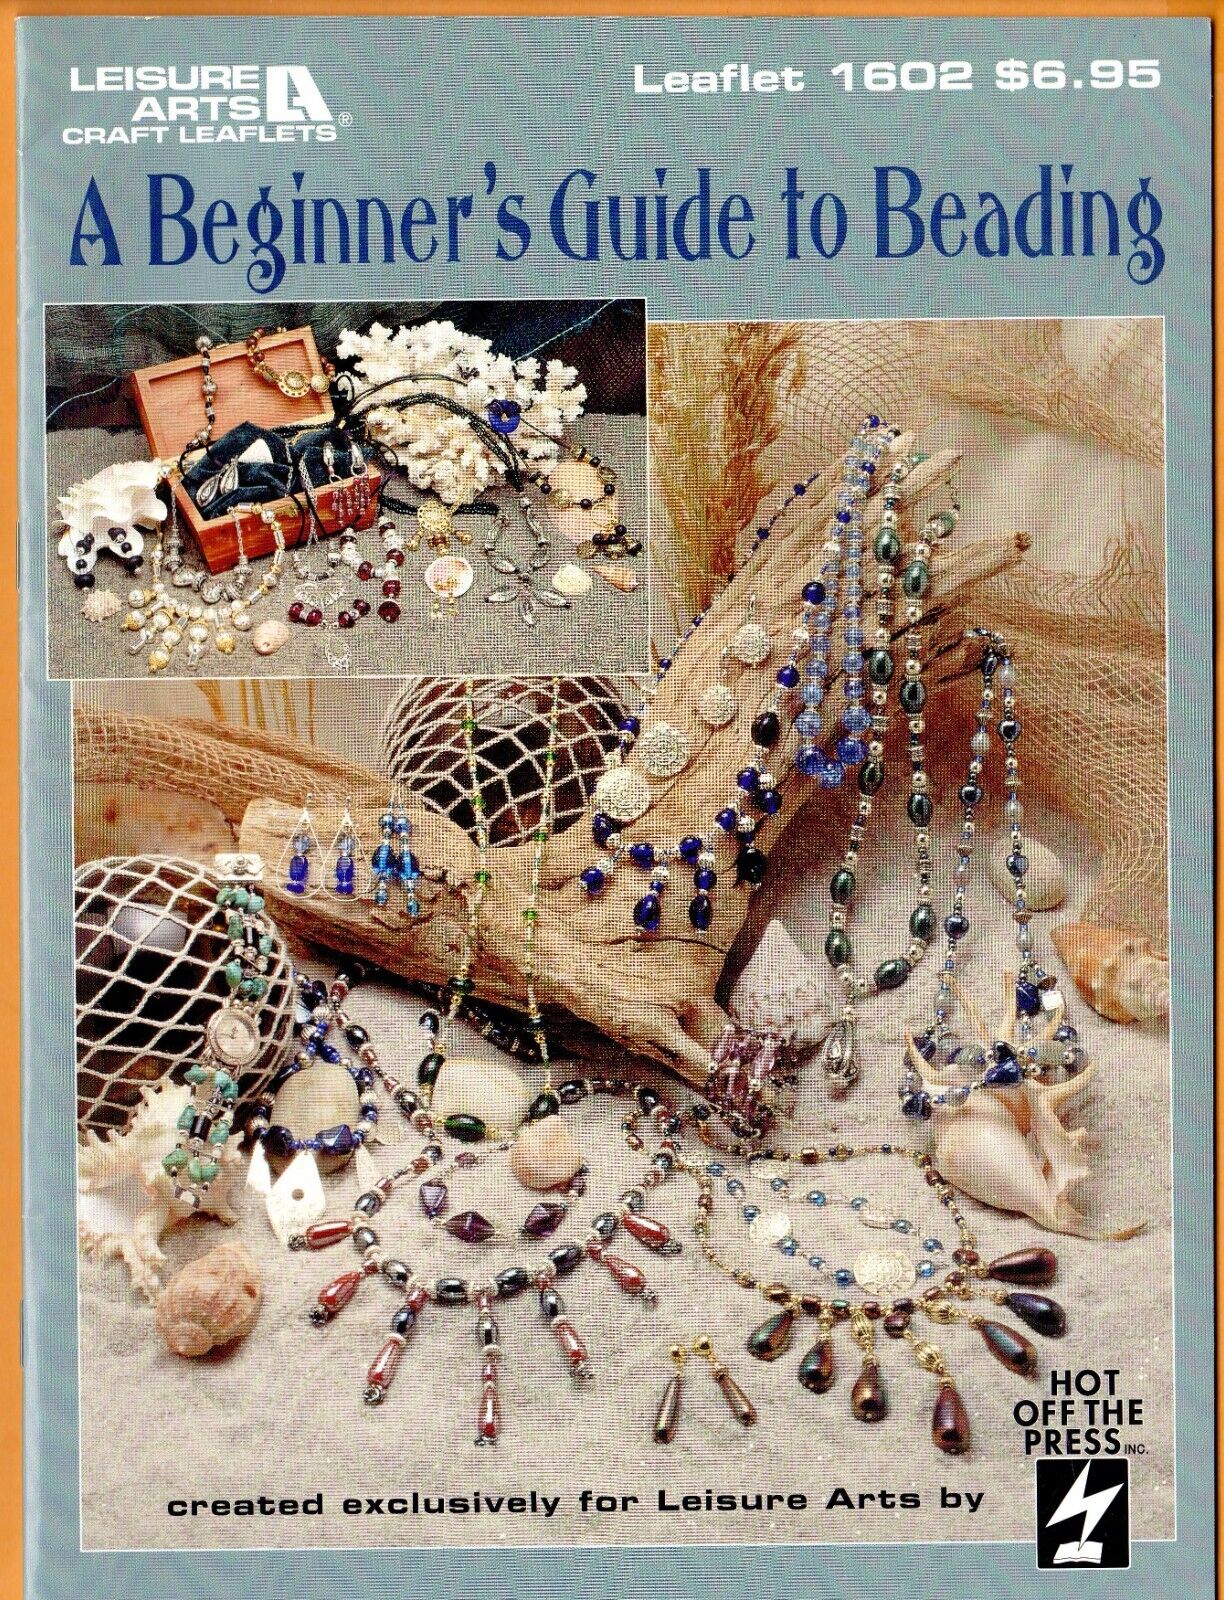 A Beginner's Guide To Beading Magazine-1995(leaflet #1602)